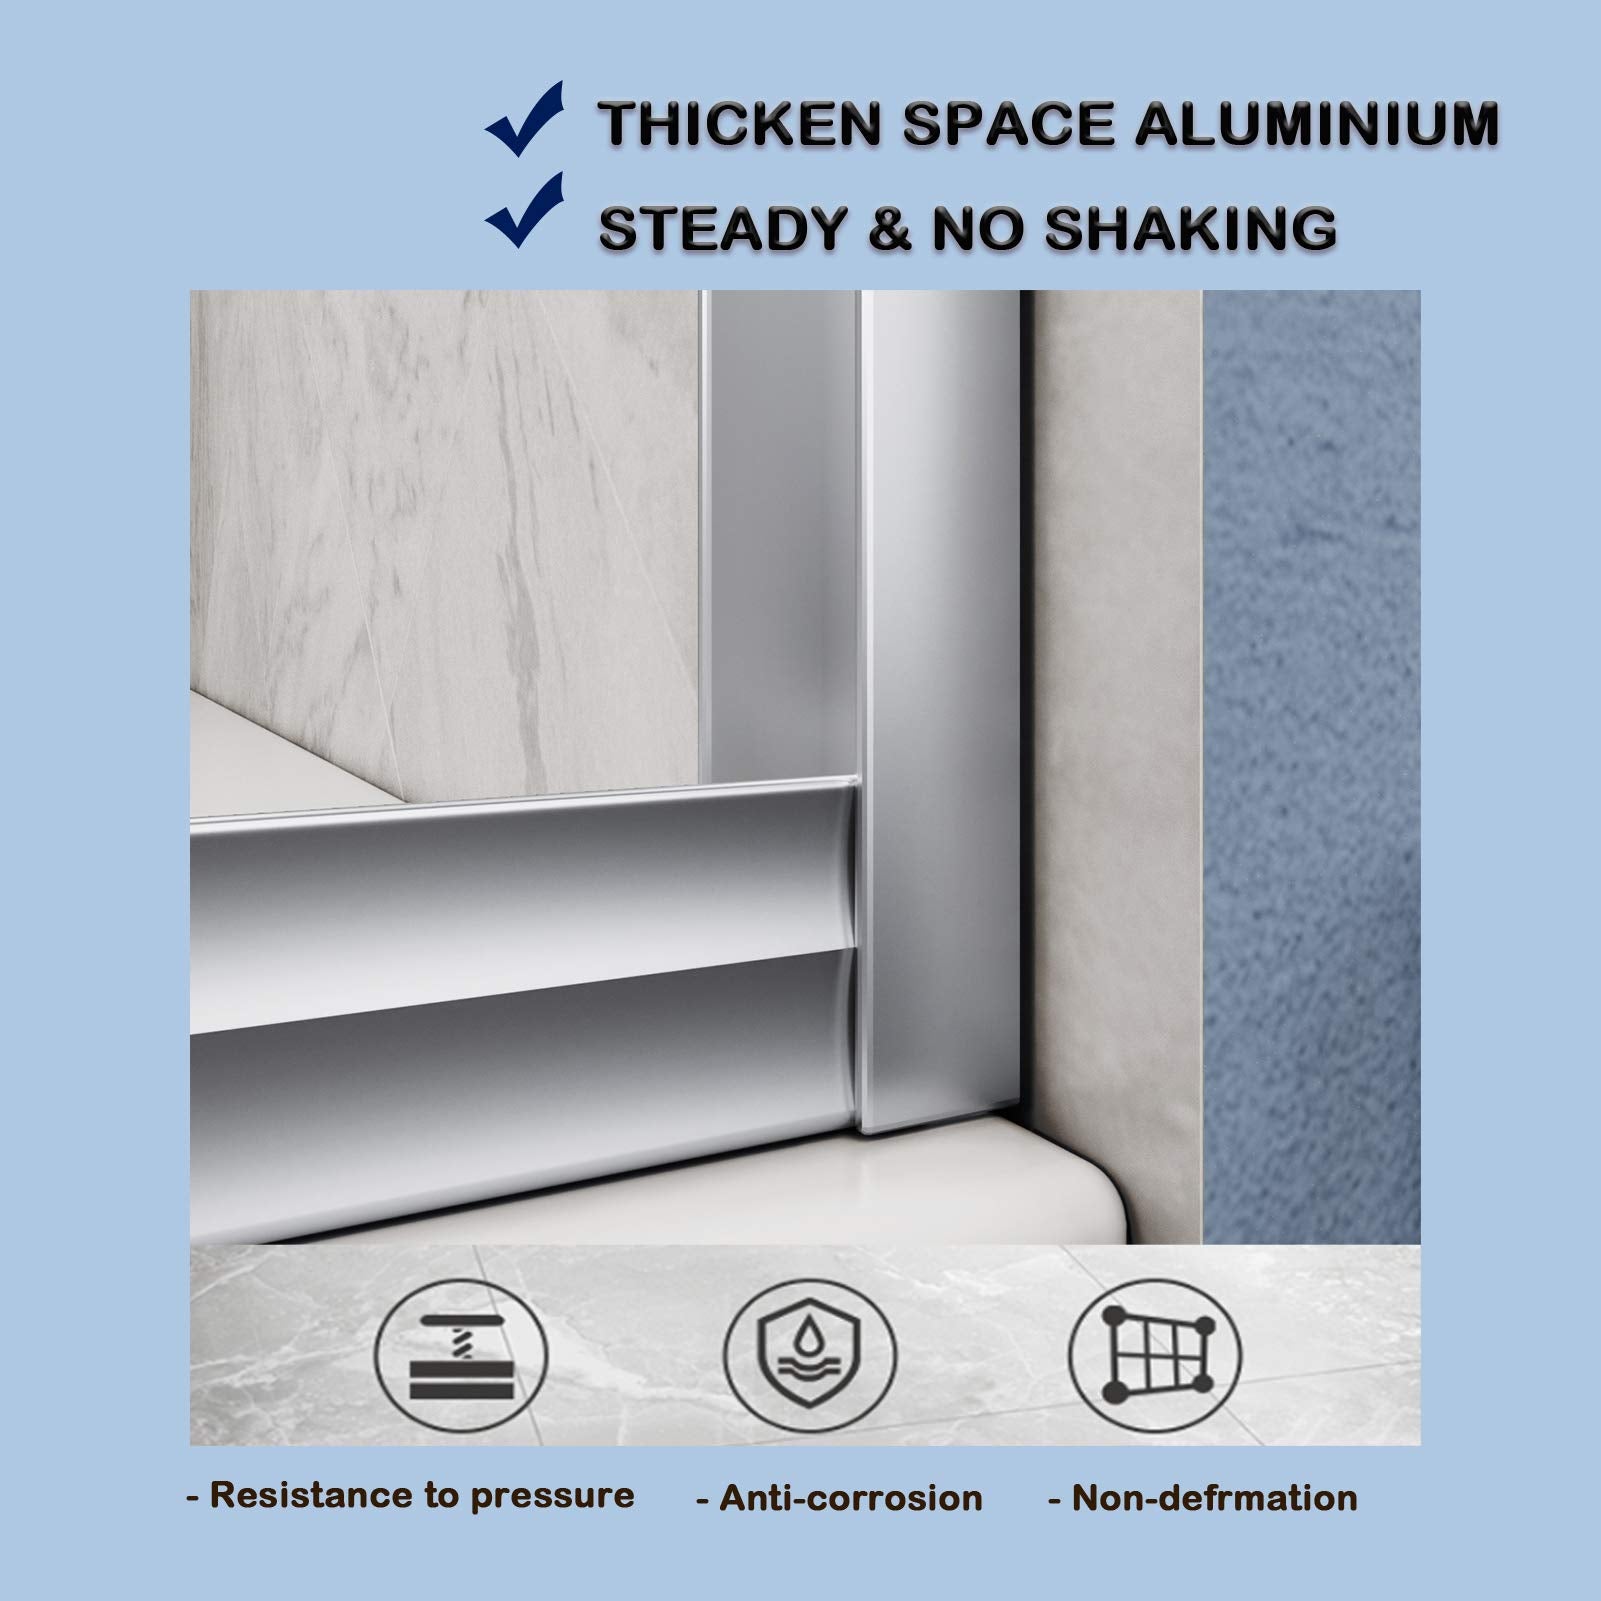 thicken space aluminium, steady no shaking